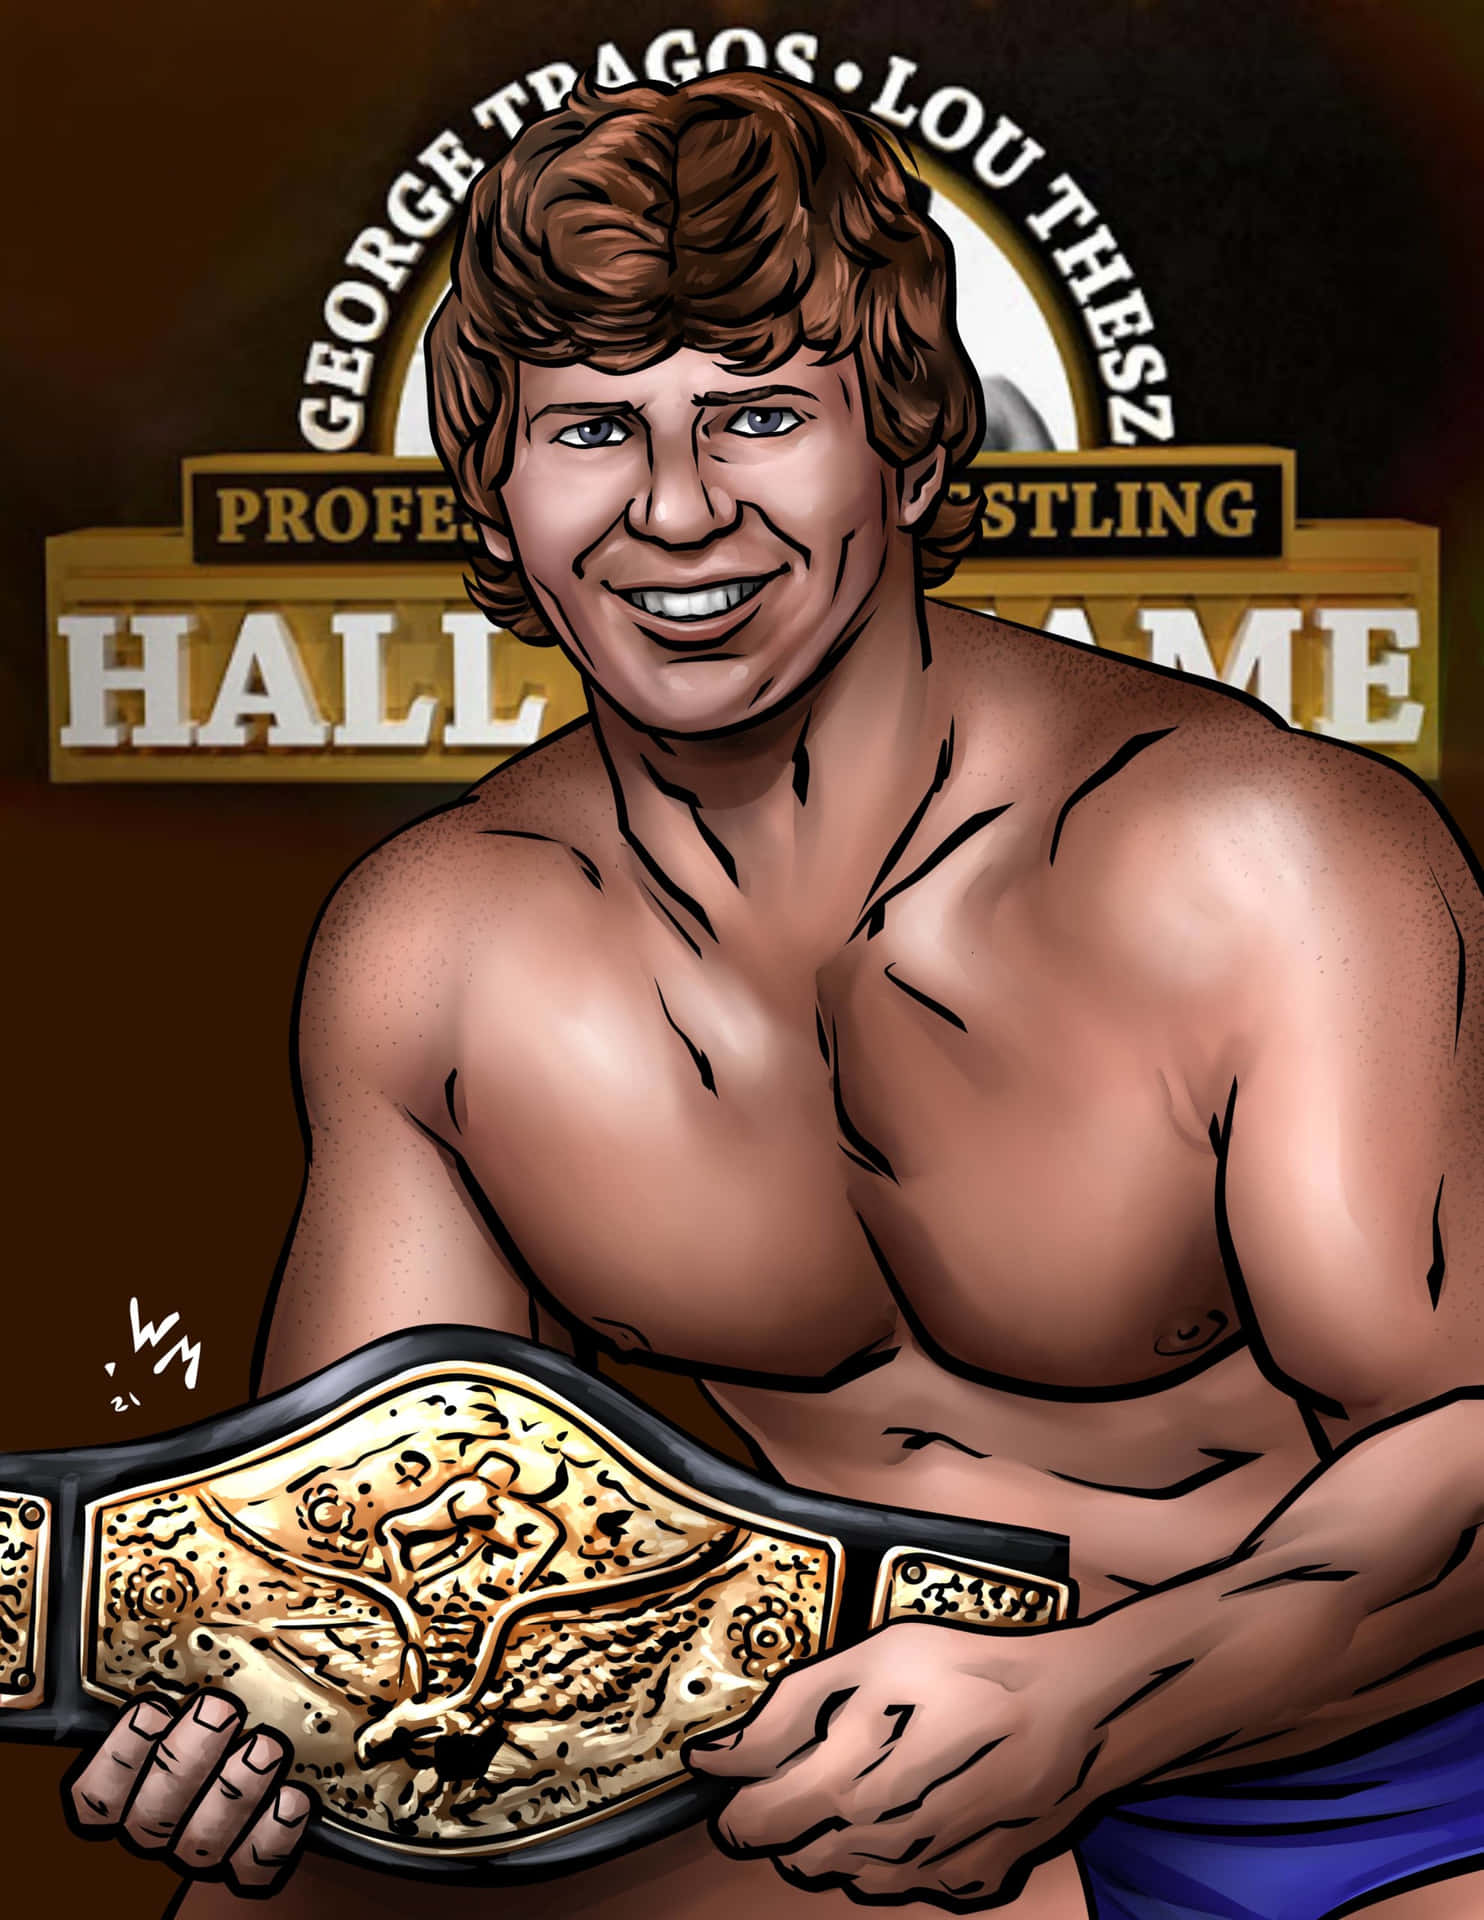 Bob Backlund WWF Champion Digital Art Wallpaper